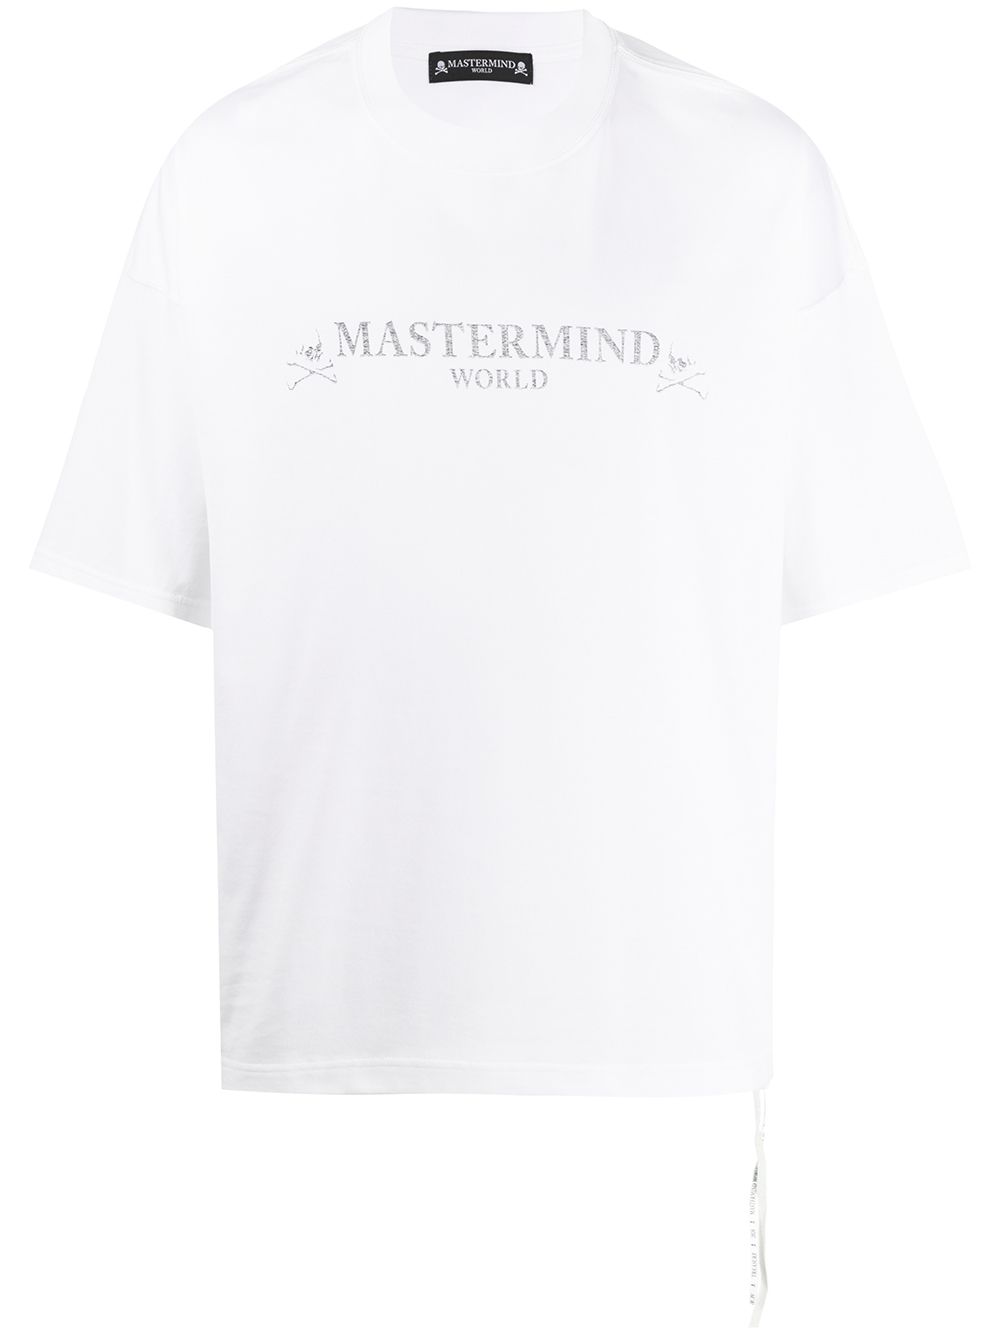 фото Mastermind world футболка оверсайз с логотипом